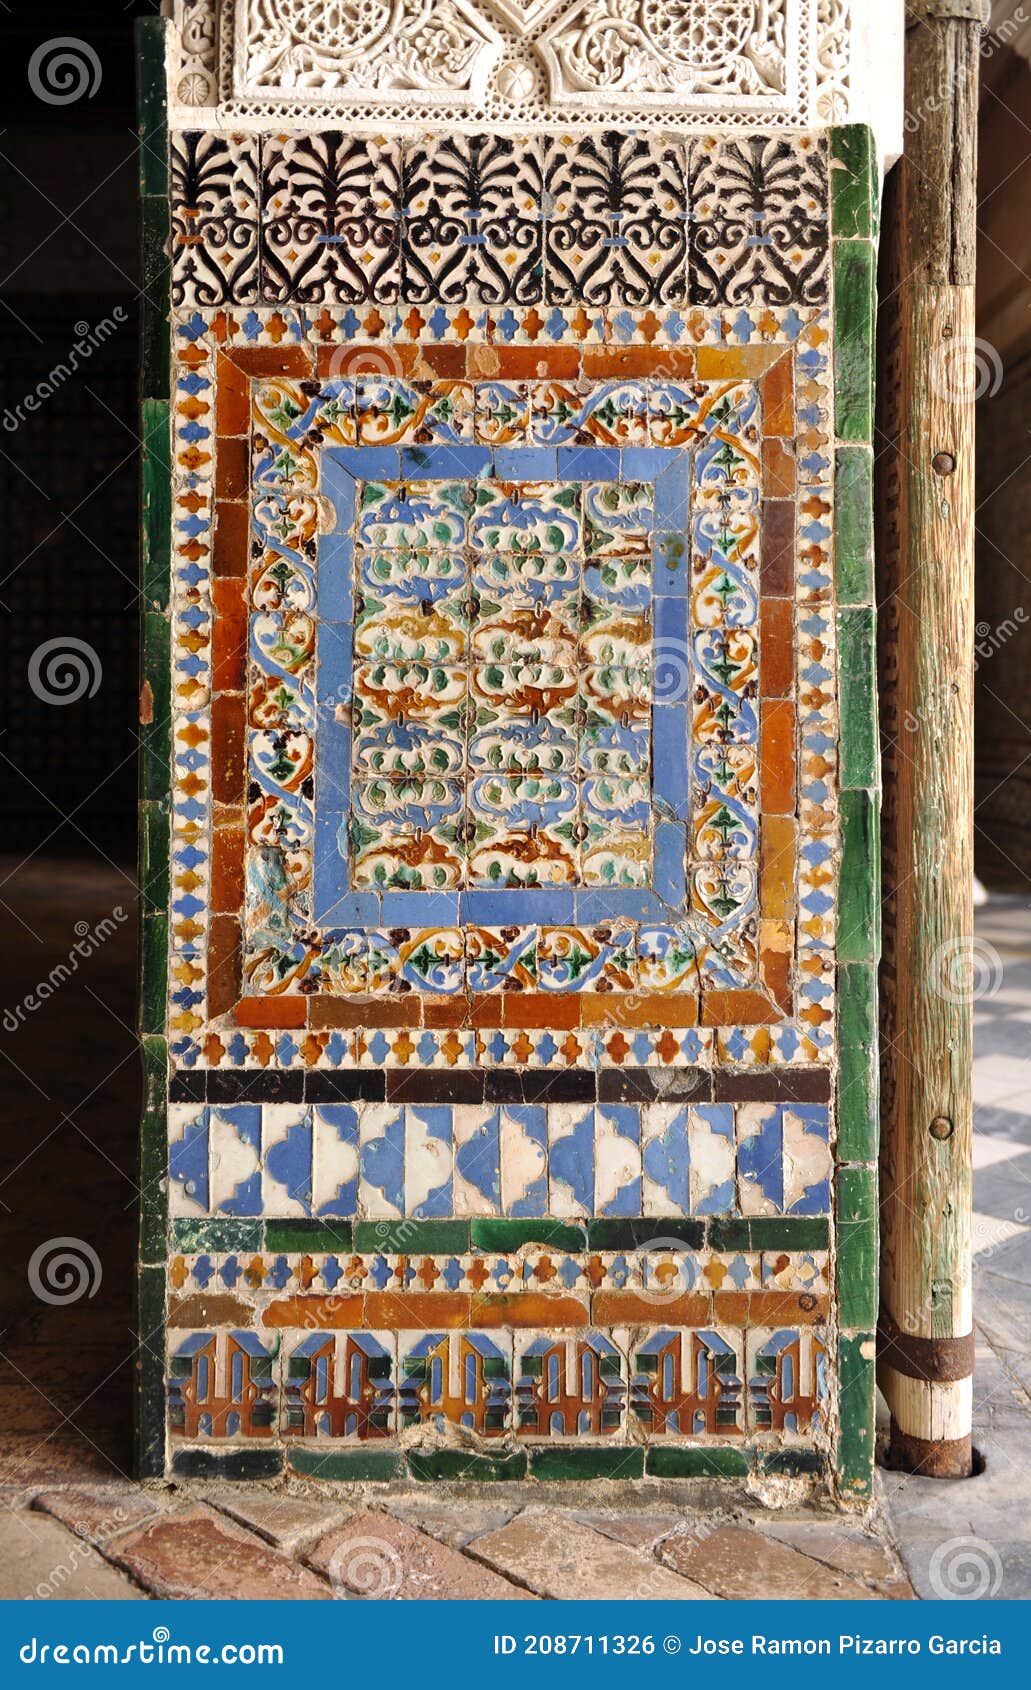 azulejos tiles of casa de pilatos palace in seville, spain.